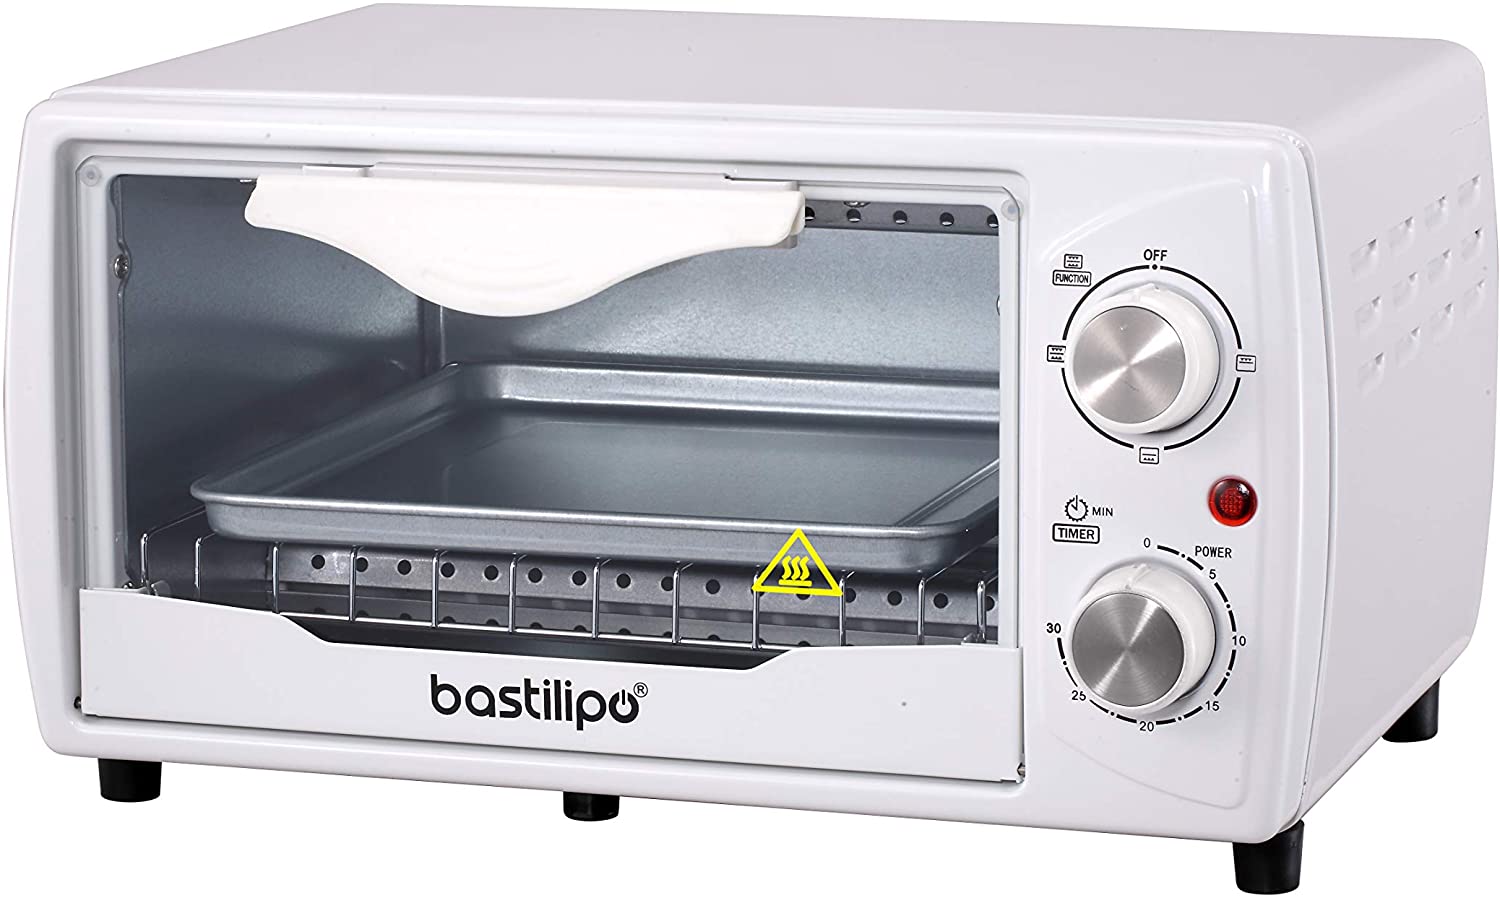 Bastilipo Bast Ilipo Pisa – Mini Oven Toaster with 9 litre capacity Vents Car Detachable, 800 Watt, White